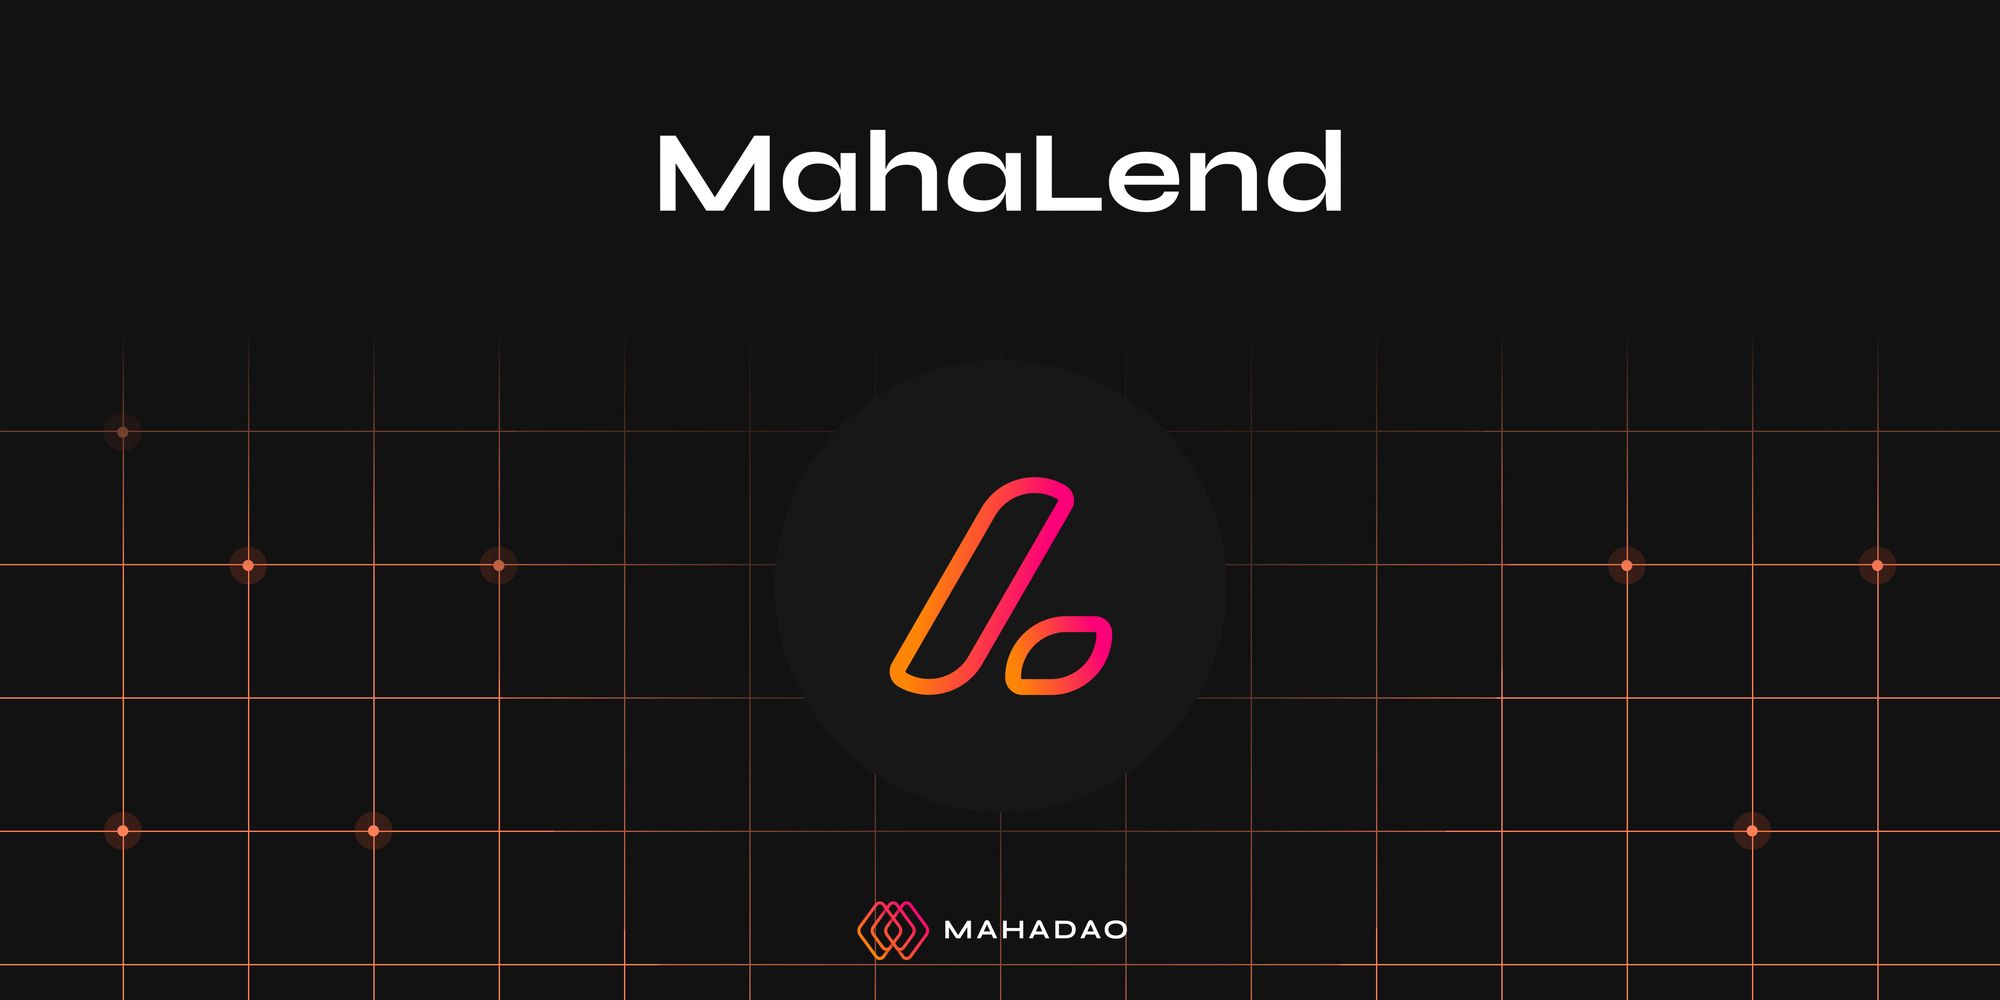 MahaLend: a Revolution in DeFi Ecosystem